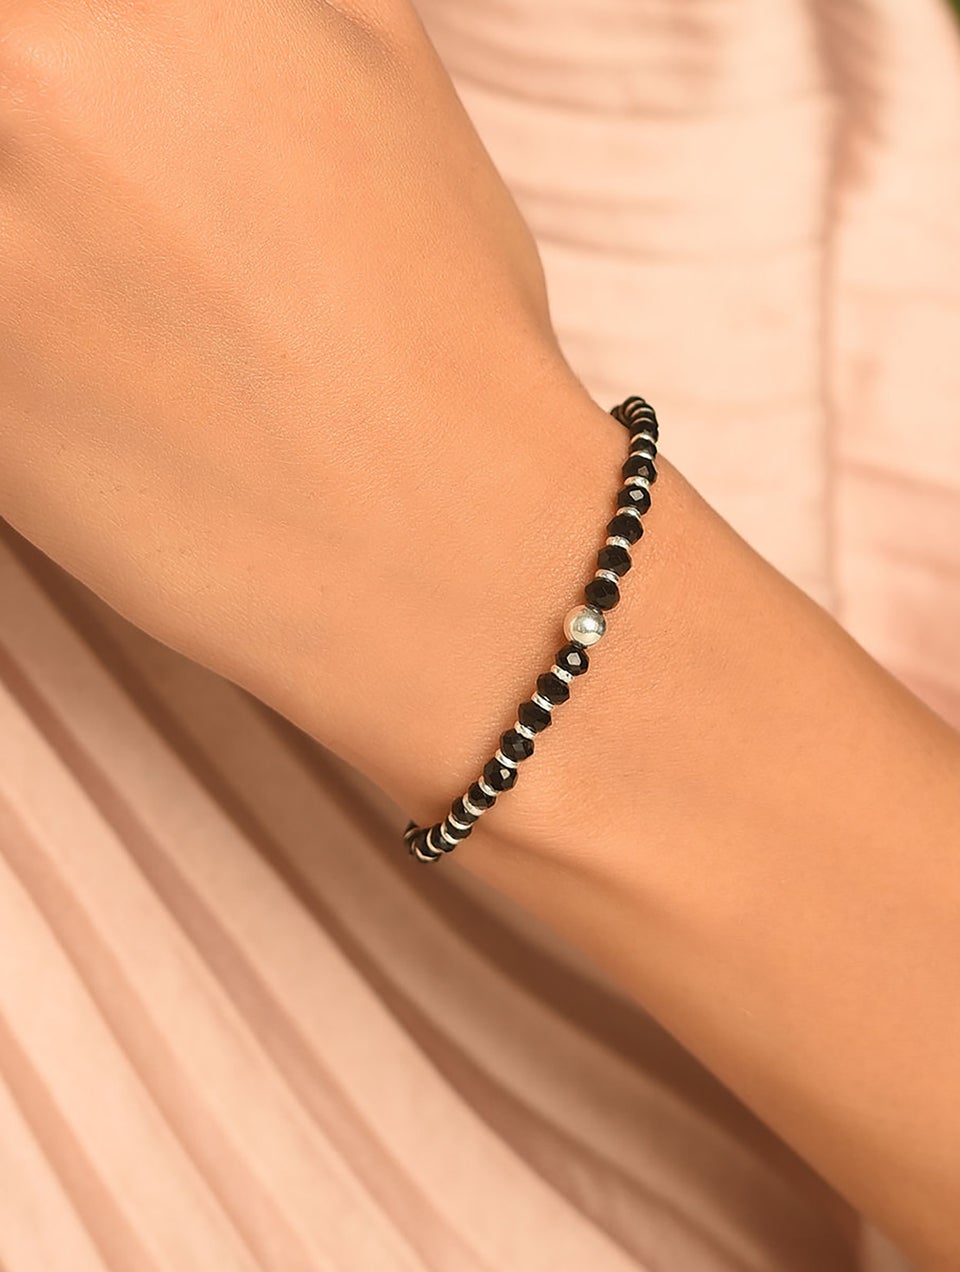 Black & Silver Beaded Bracelet with Bells - Jewel House Australia-chantamquoc.vn